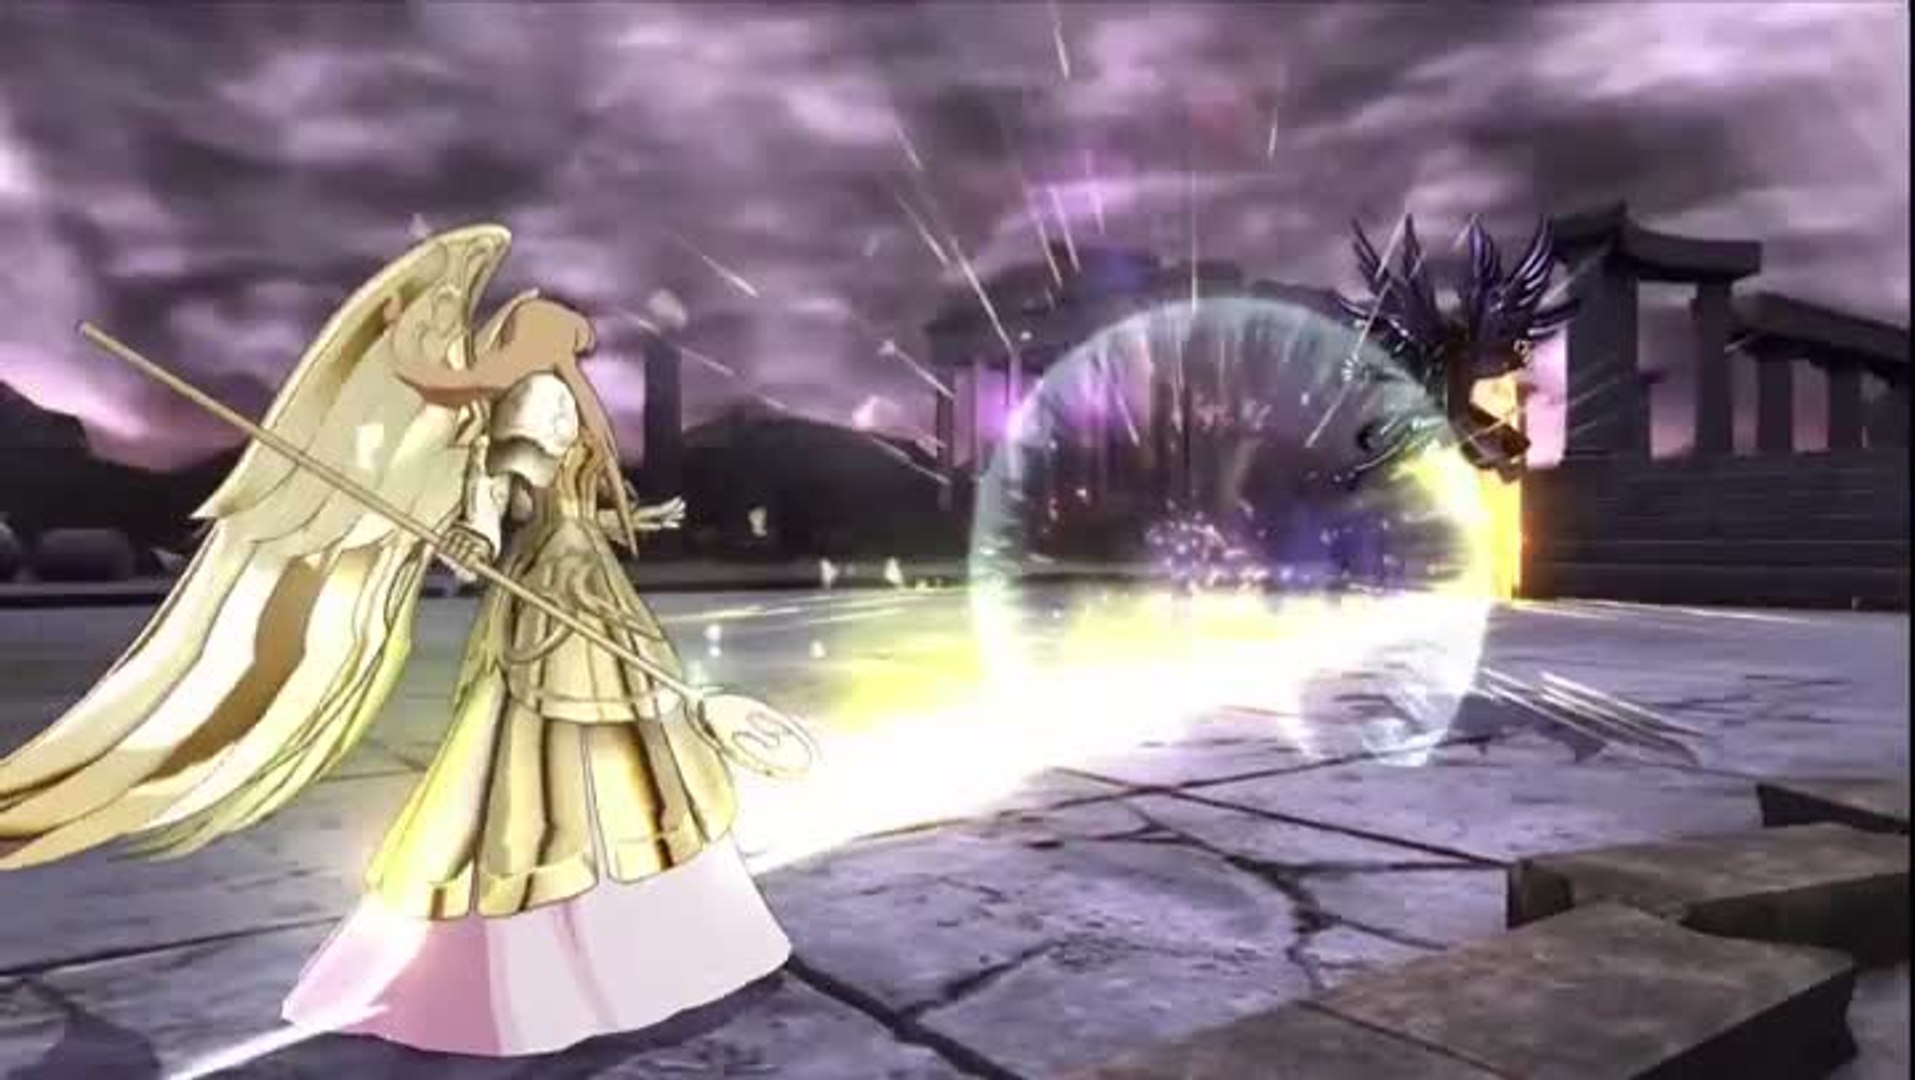 Saint Seiya Soldiers' Soul - PS3/PS4/Steam - Athena vs Hades (English) 